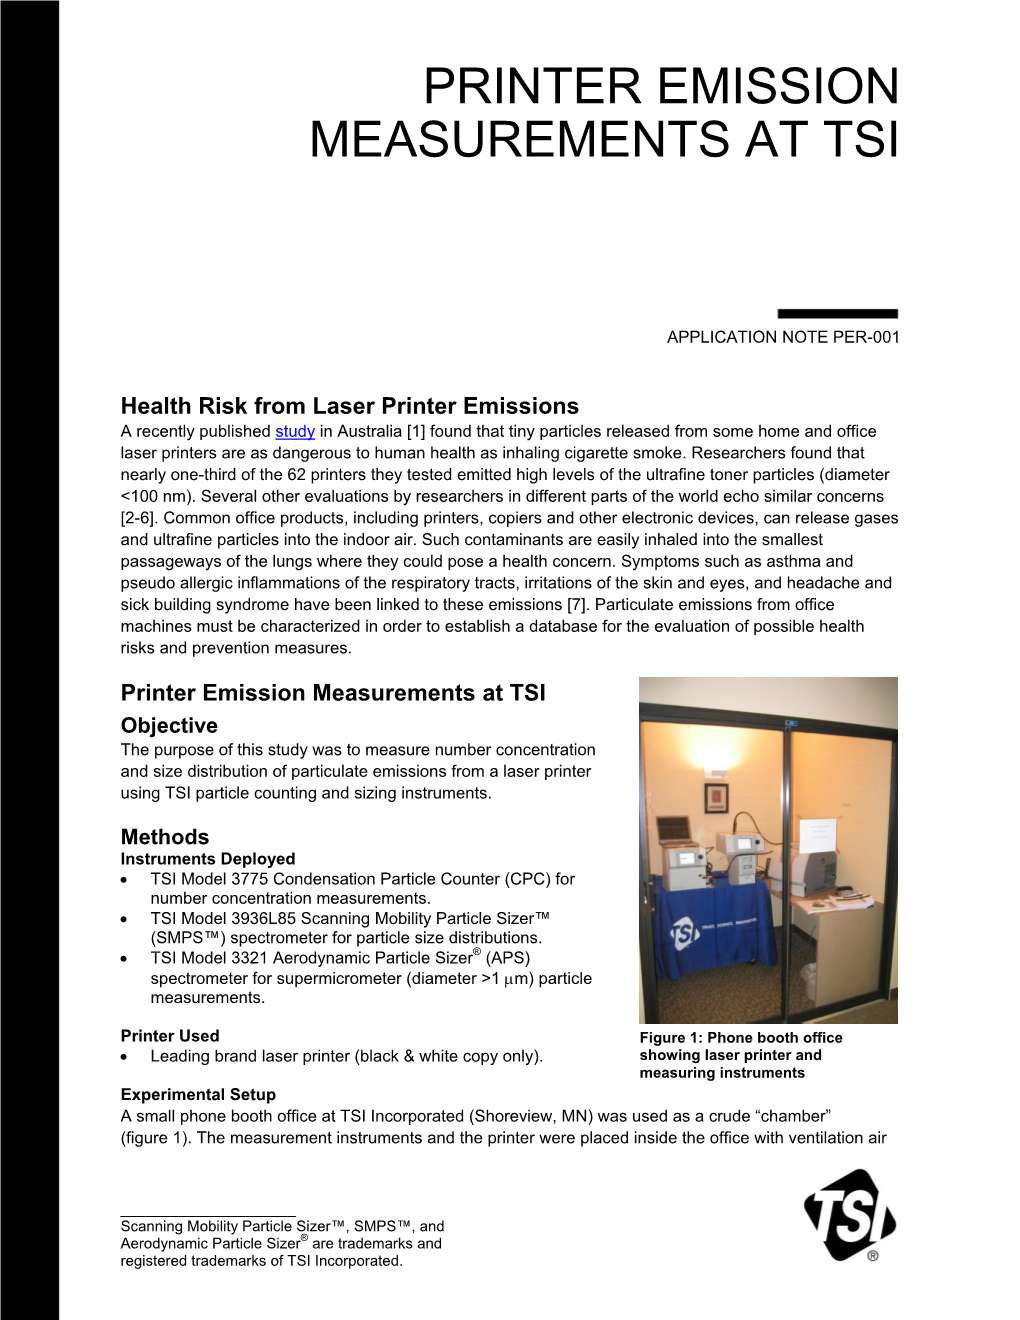 Printer Emission Measurements at TSI Application Note PER-001